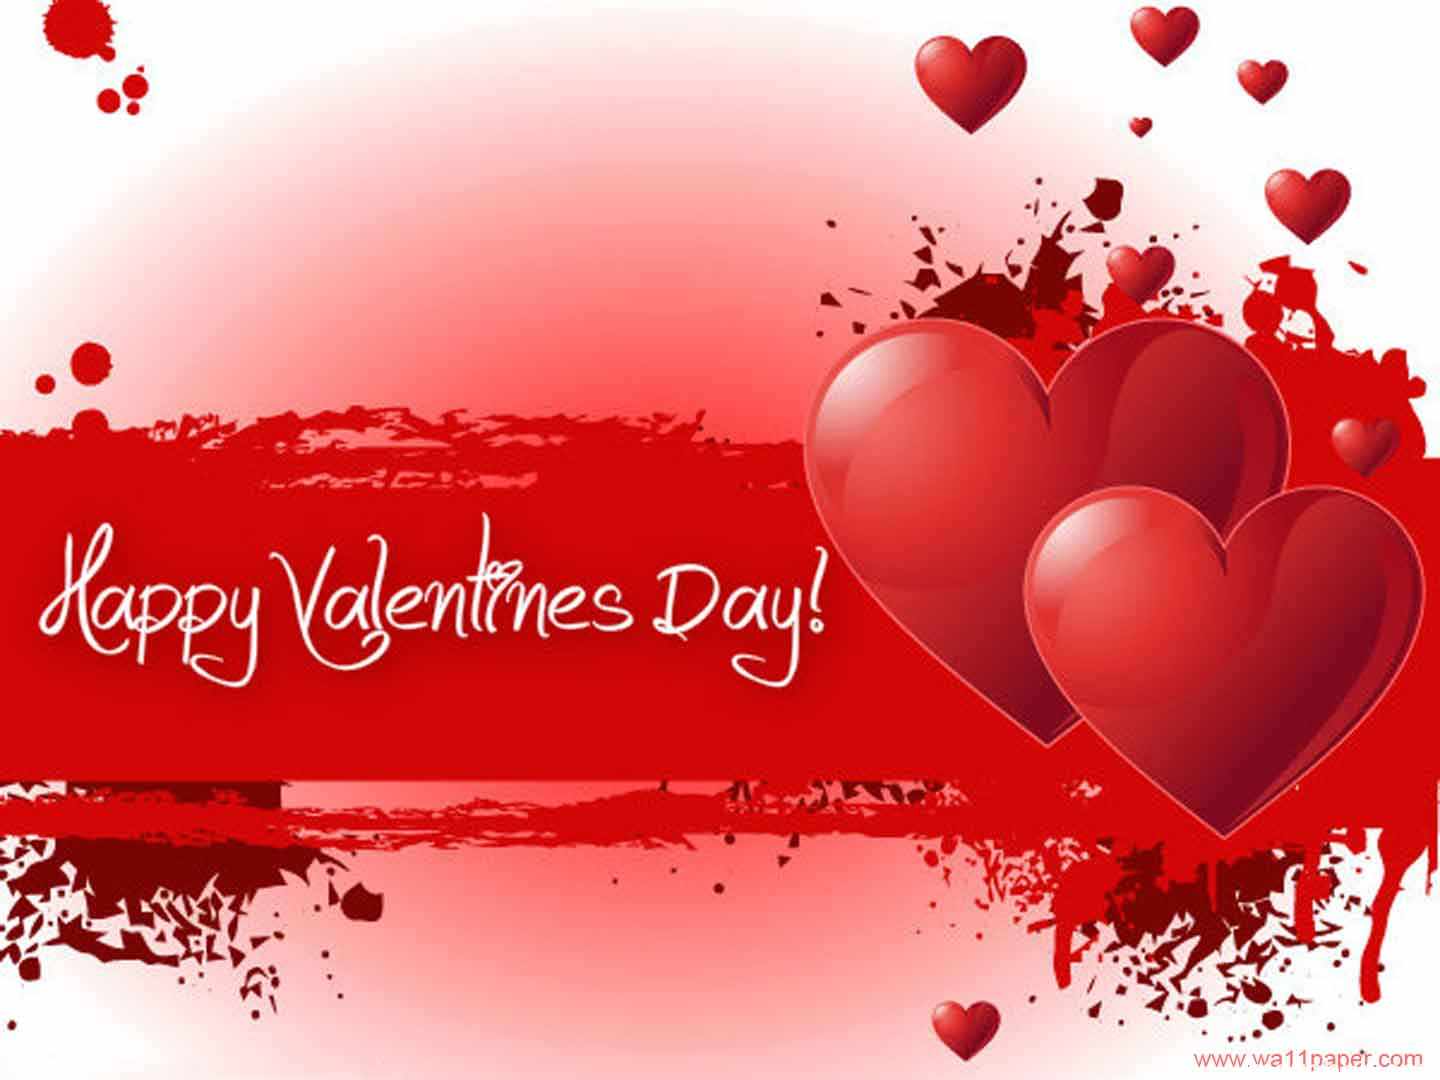 Happy Valentine's Day Hearts Picture